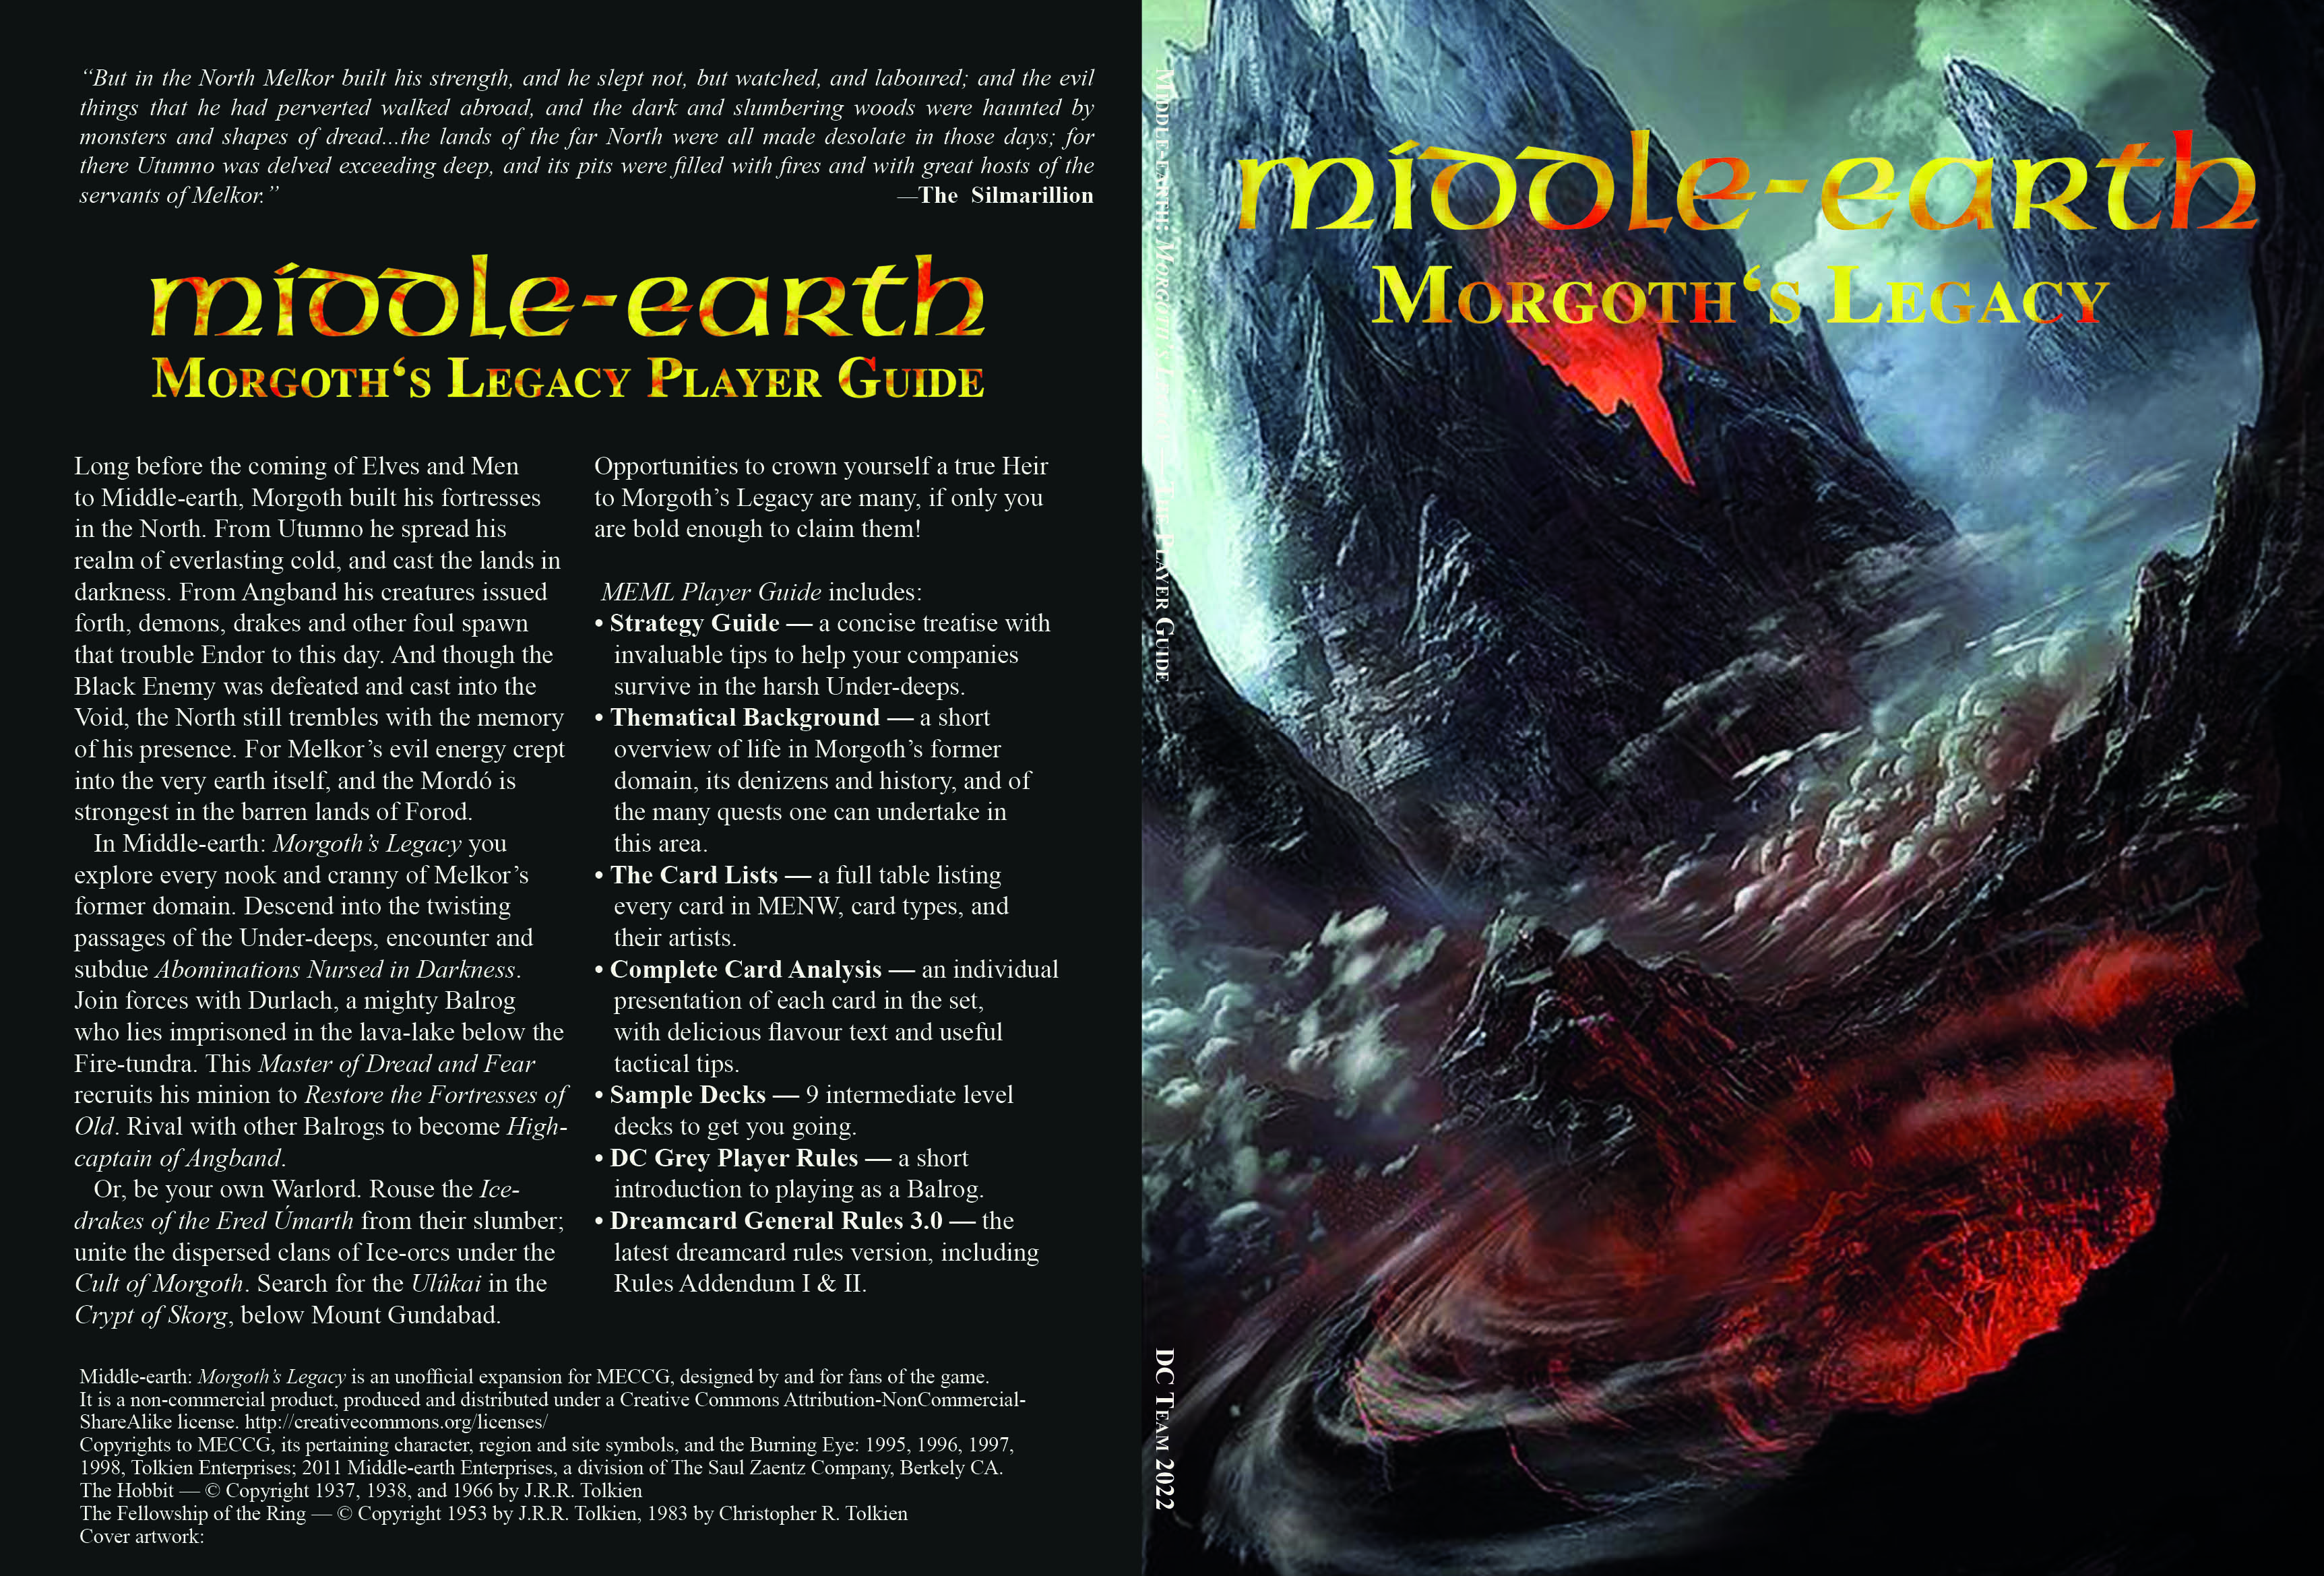 Morgoth's Legacy PG cover2.jpg